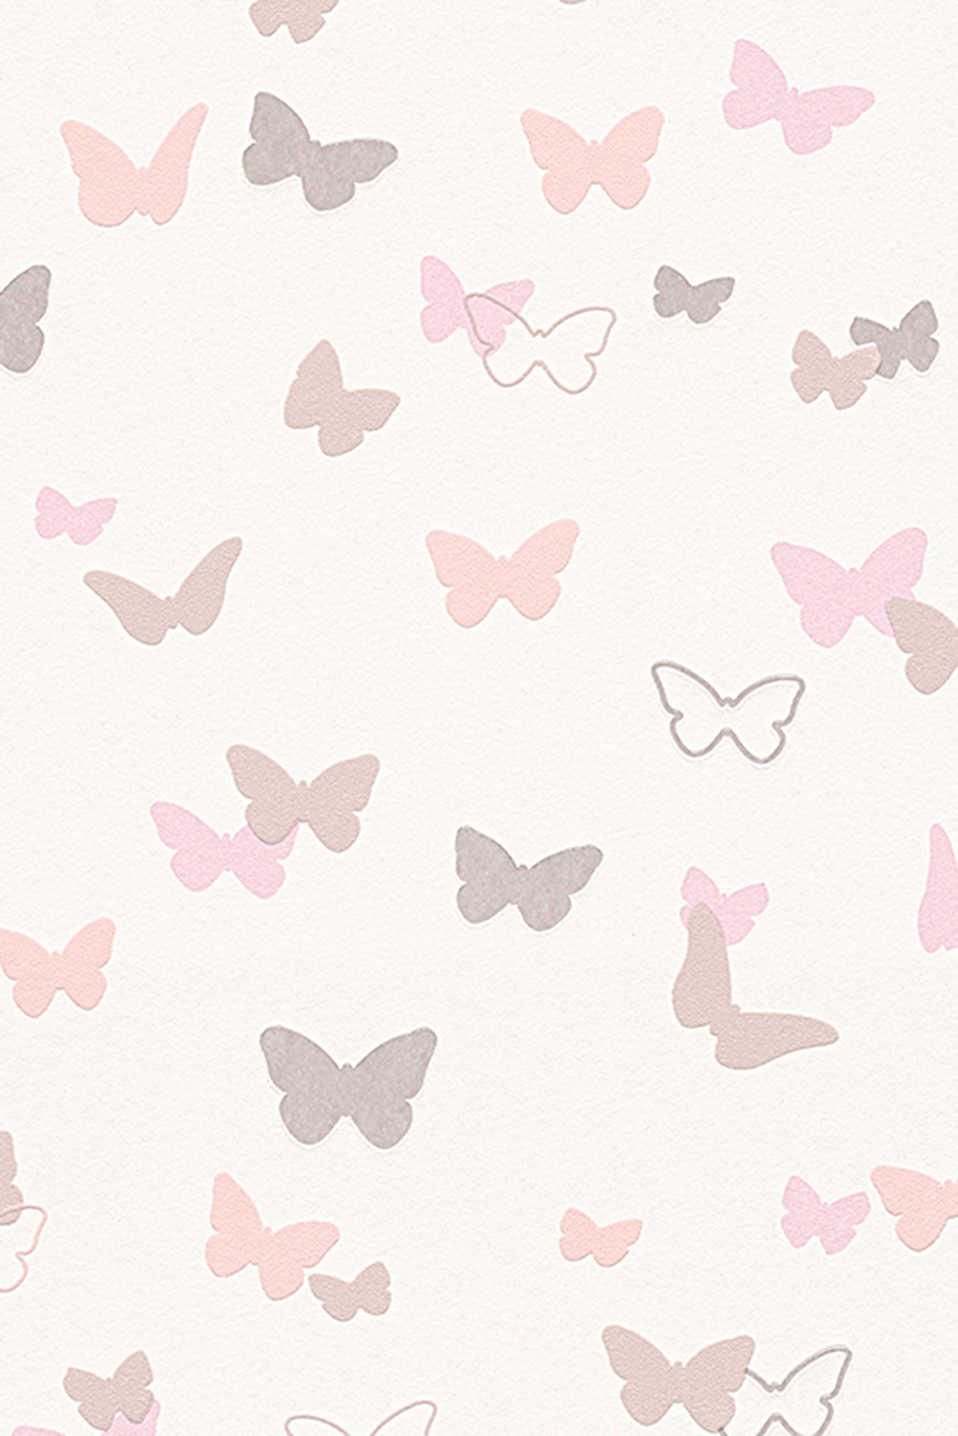 challenging star darshan wallpaper,pink,butterfly,pattern,design,wallpaper